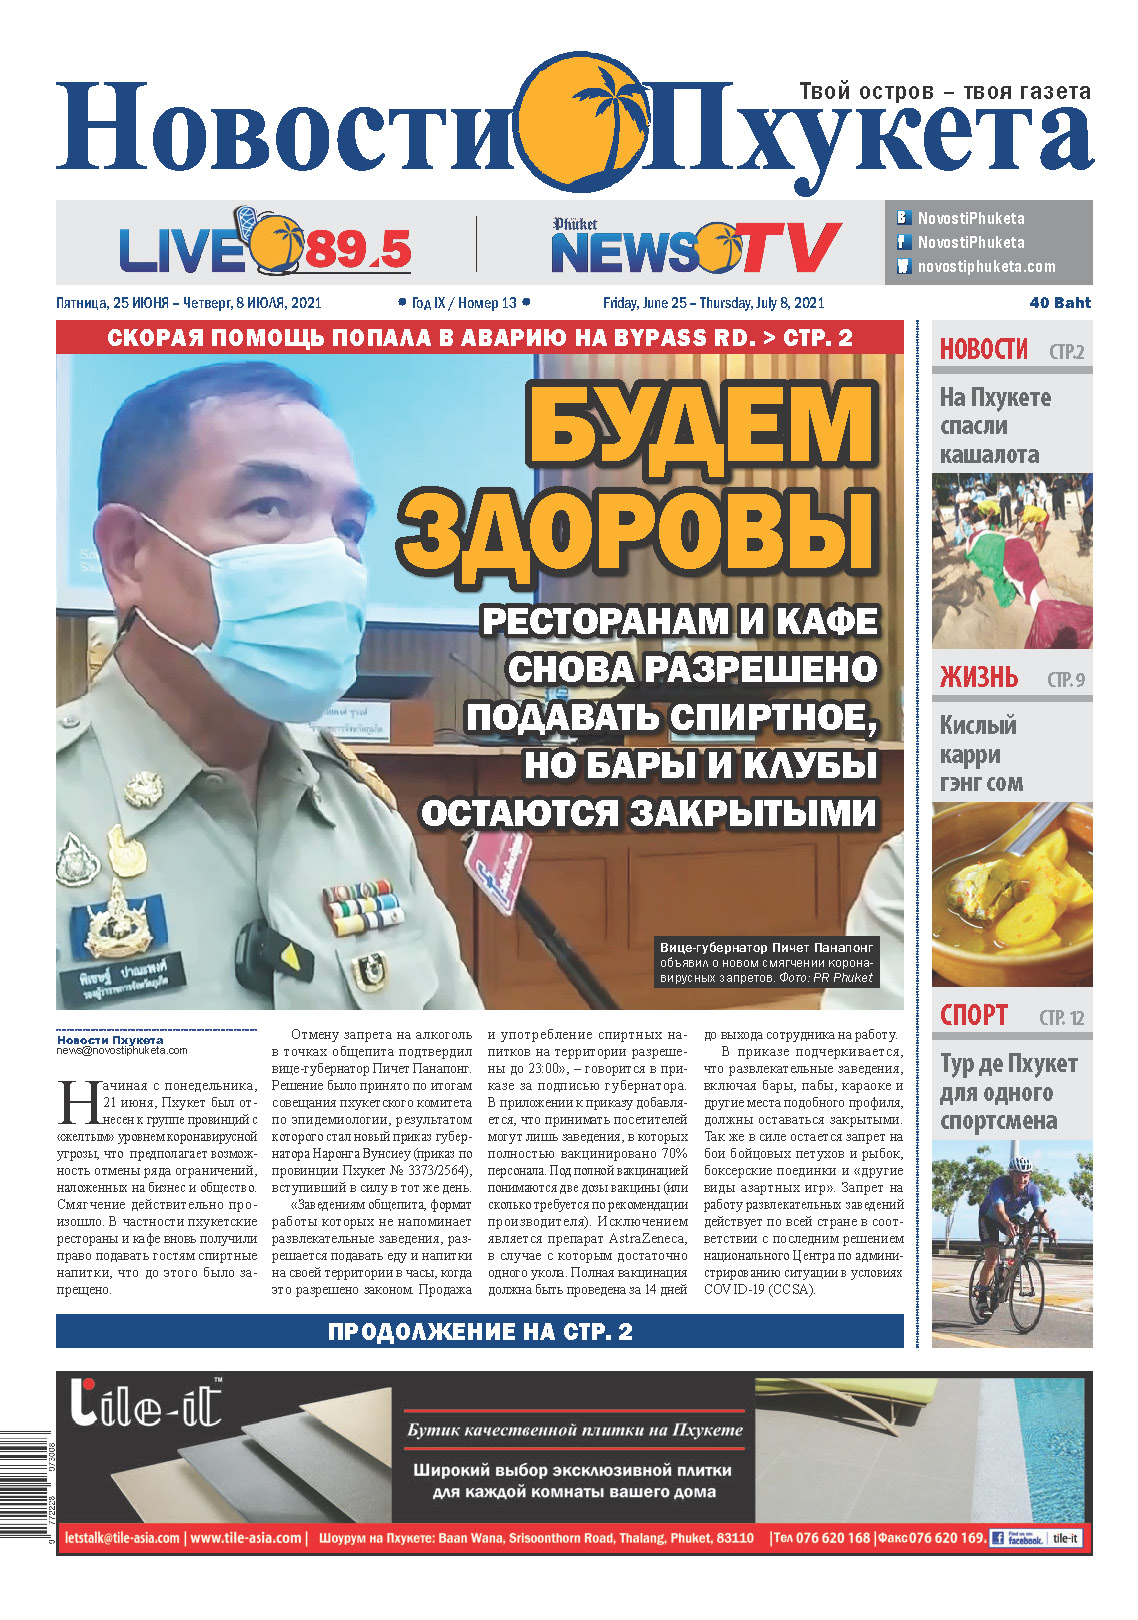 Phuket Newspaper - https://www.novostiphuketa.com/archive/25-06-2021/25-06-2021_Page_01.jpg